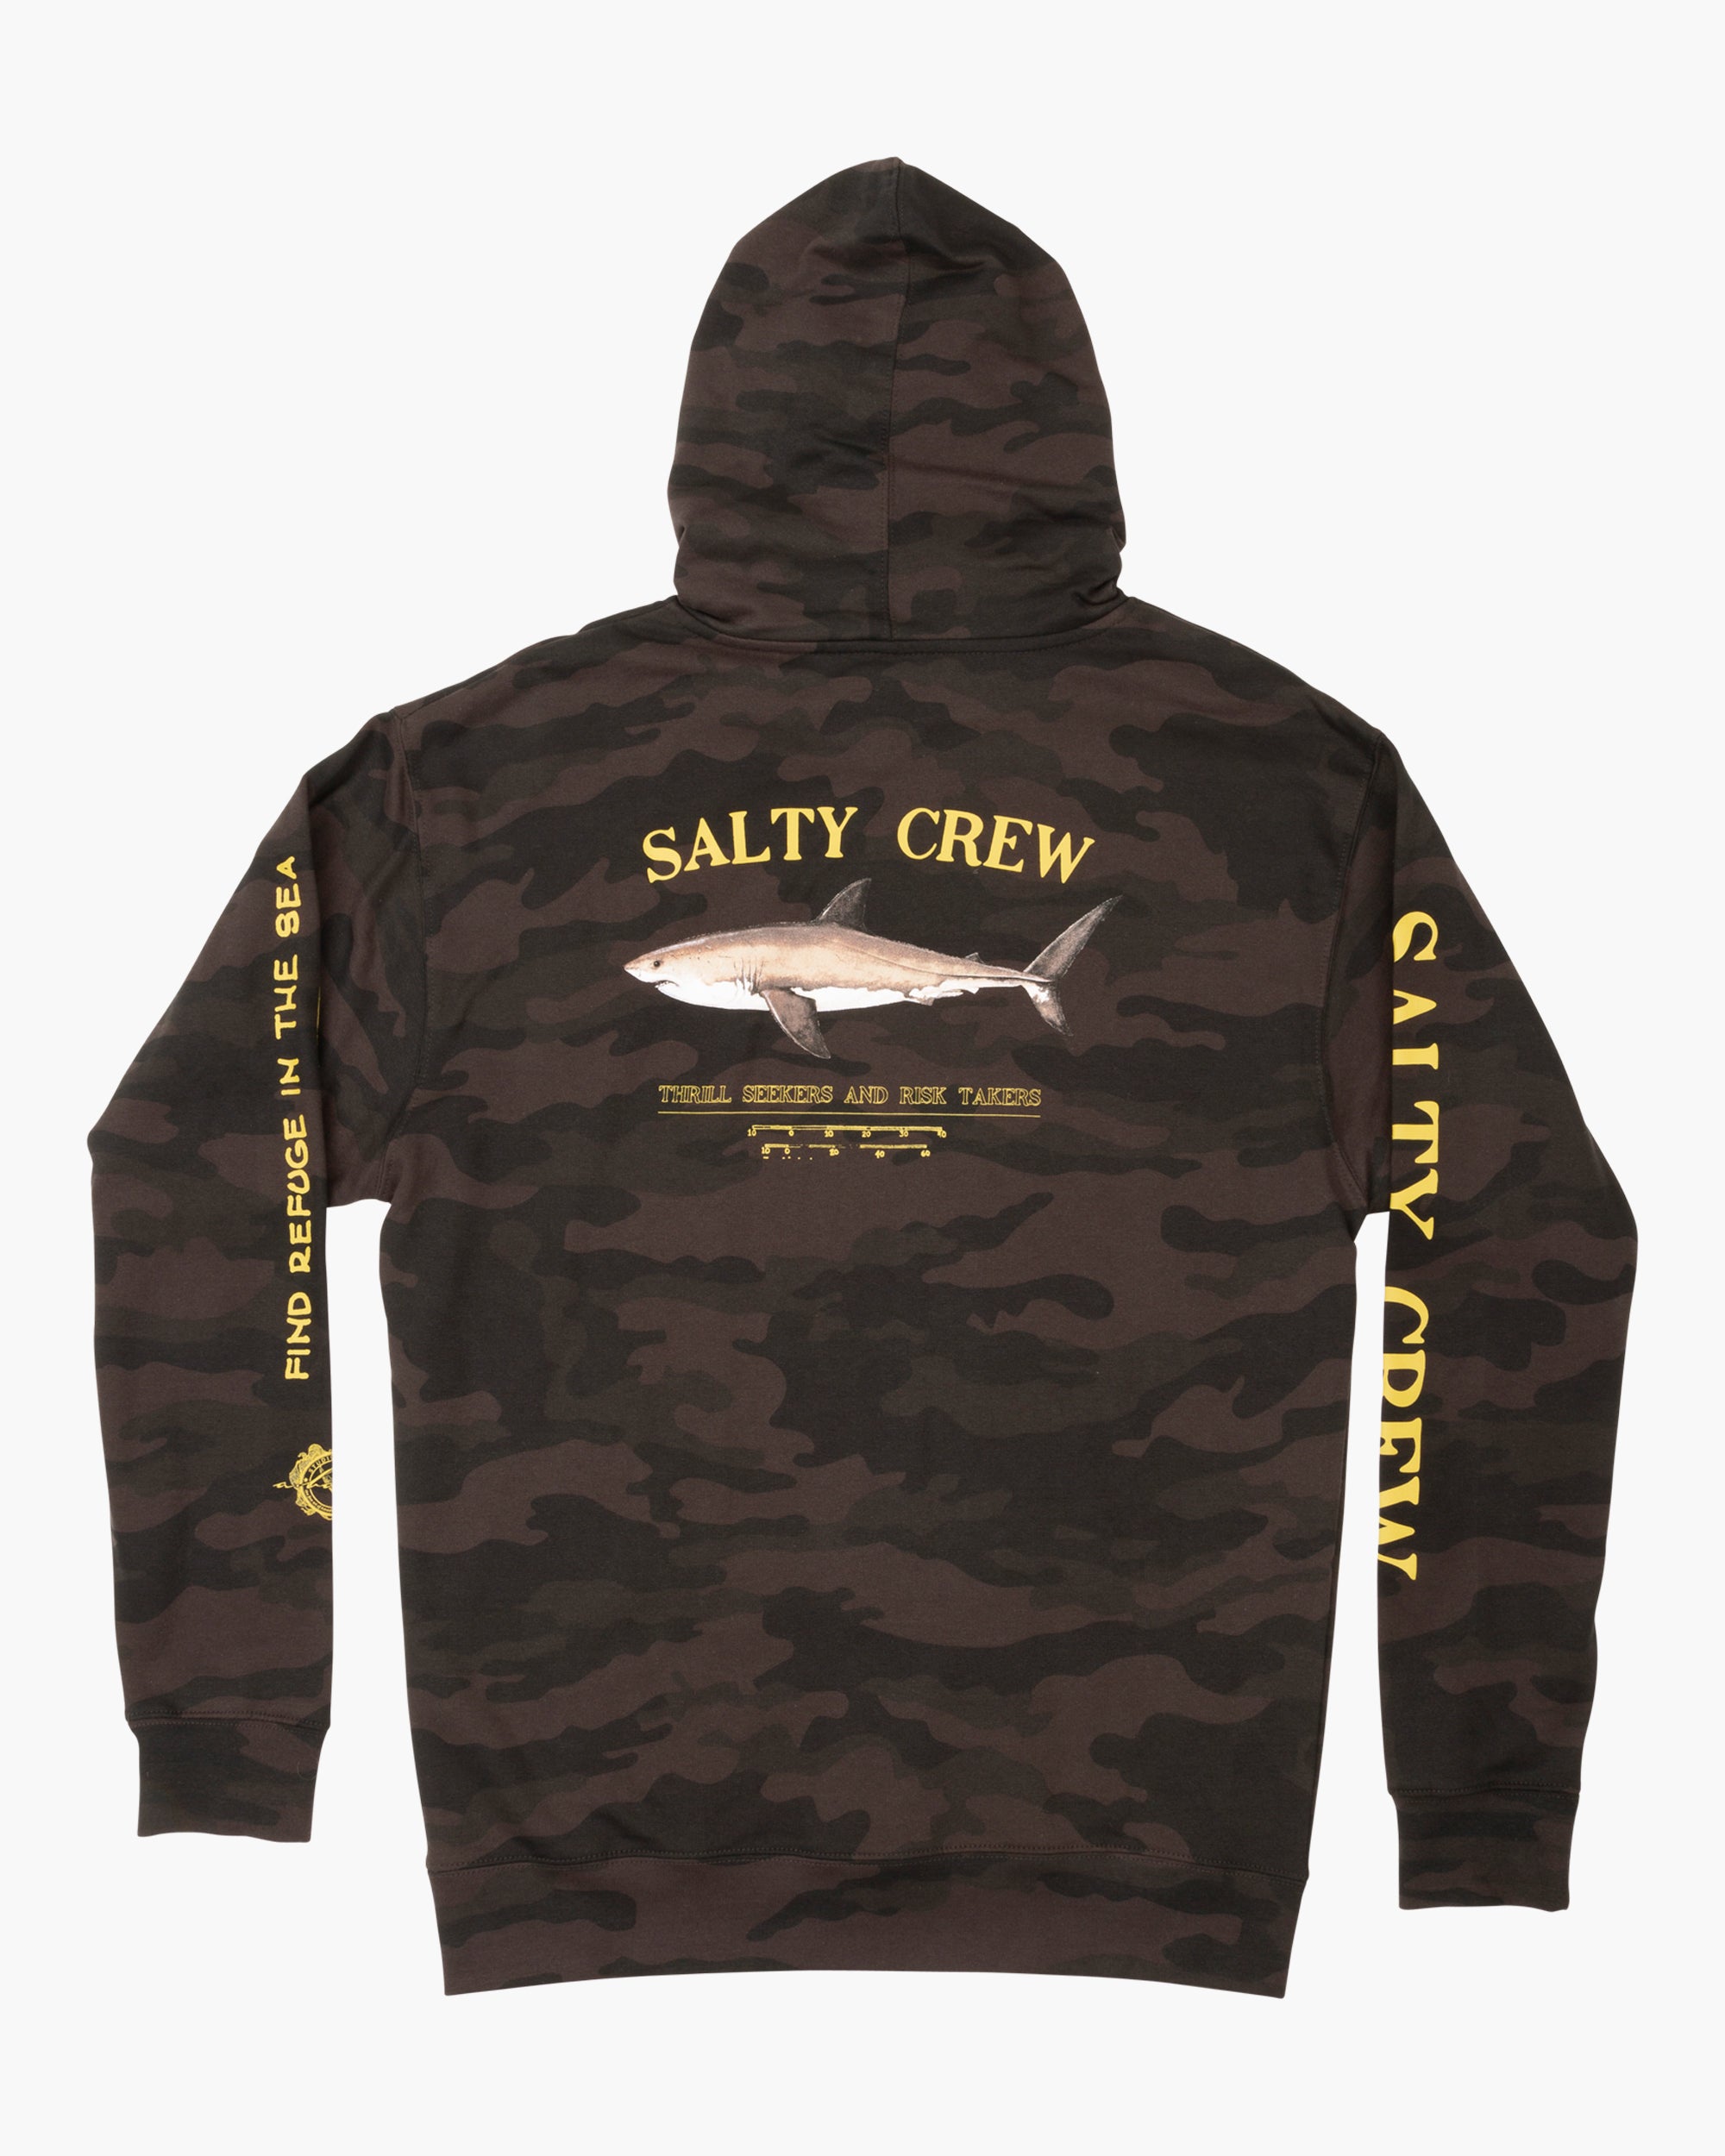 Salty Crew Mariner Surf Hoody - Black Camo - M